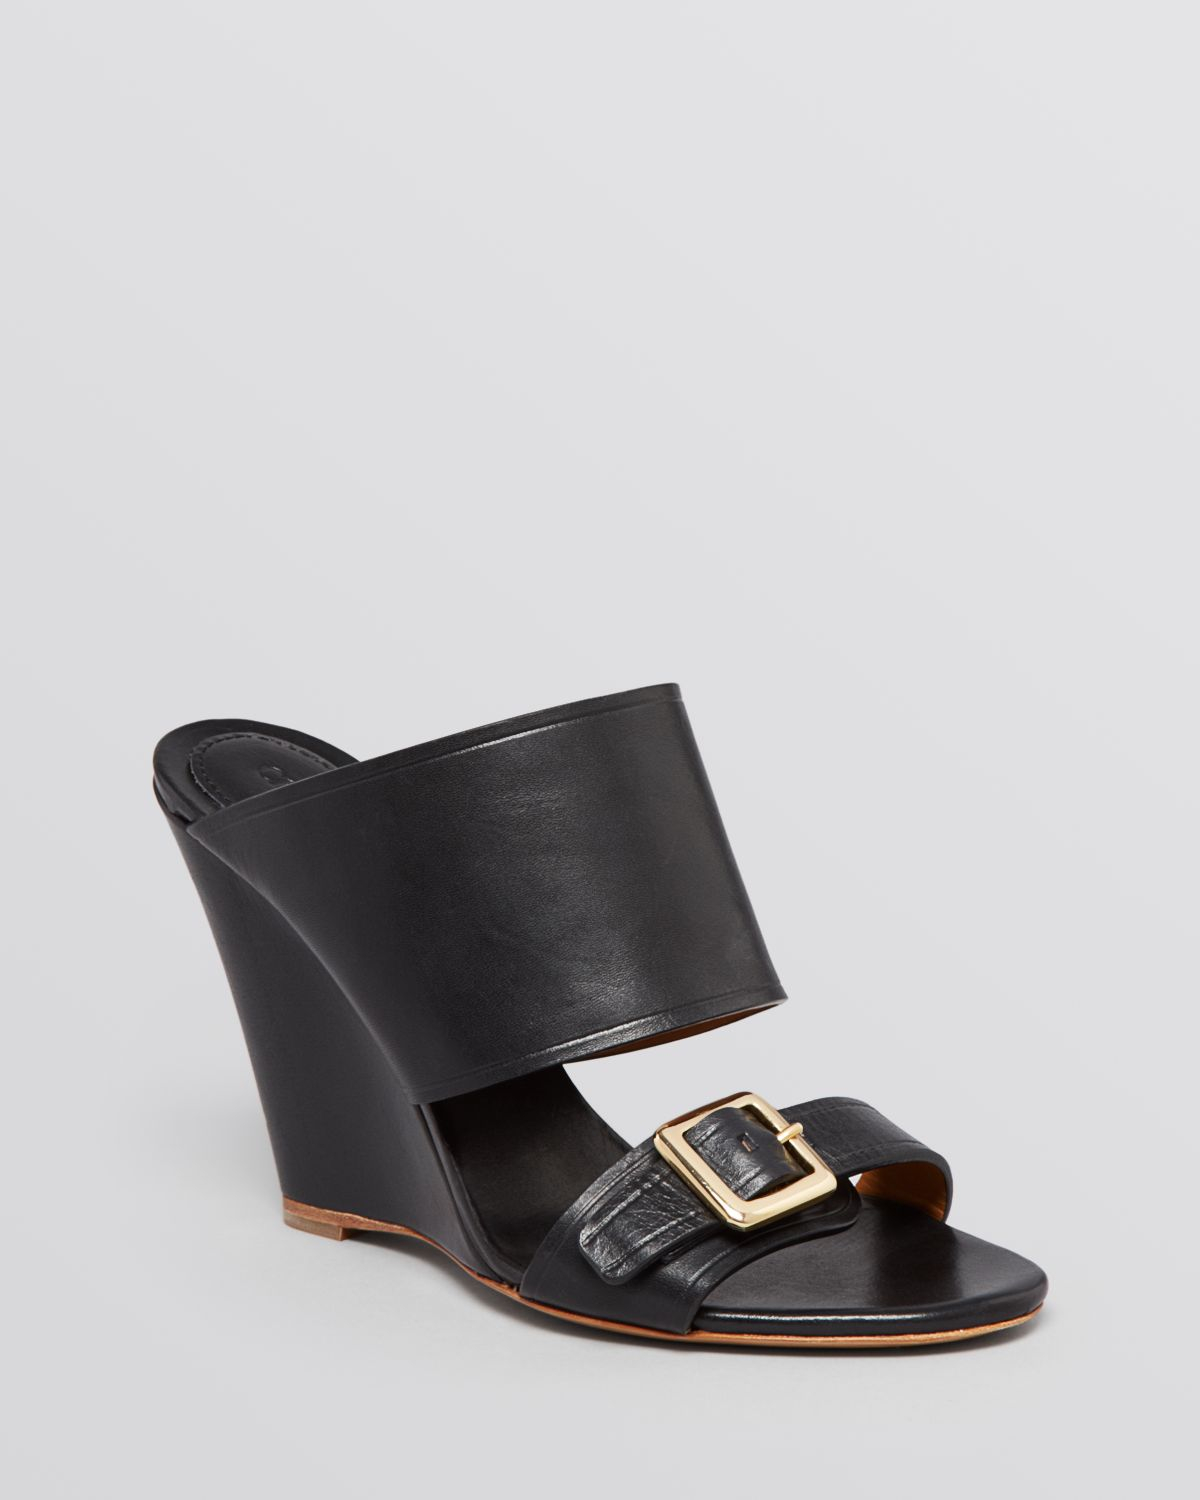 Lyst - Chloé Double Strap Slide Wedge Sandals in Black